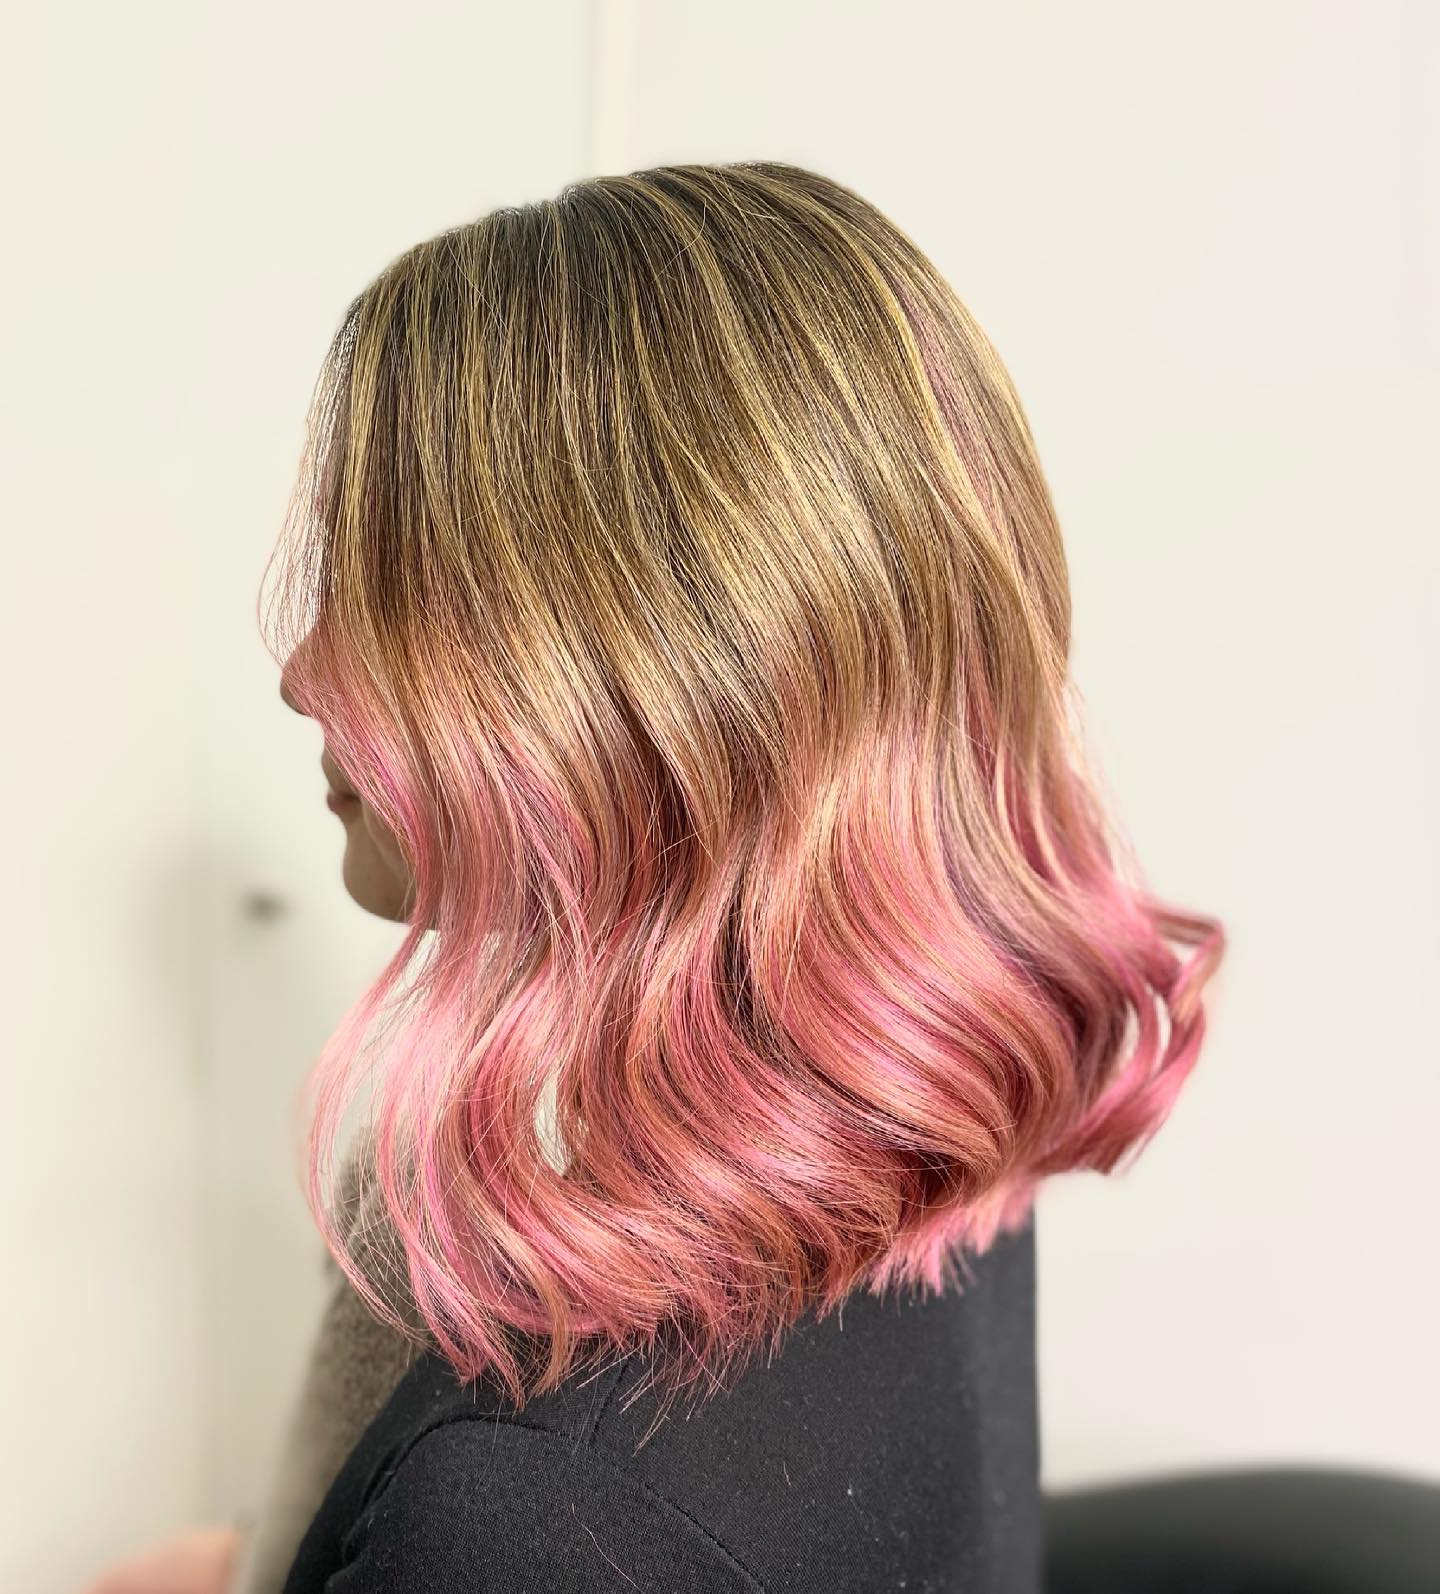 207157146 1085646961959696 8036552936738870250 n - Ombré hair rosa: 60 inspirações, trends